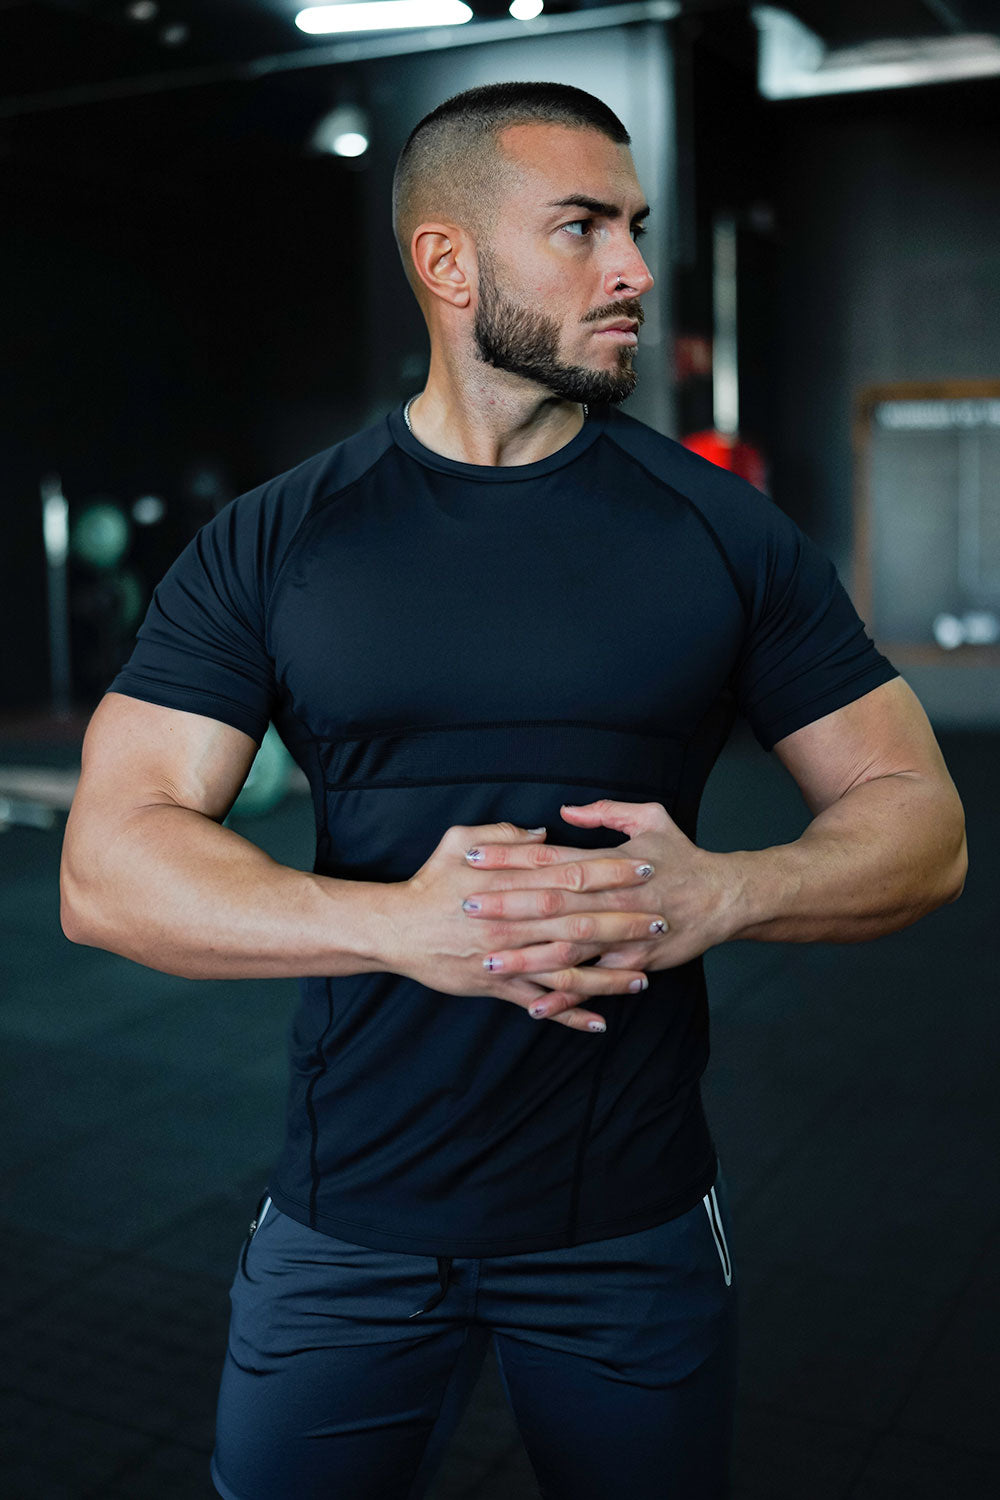 JARKADA Mens Athletic Shirts Short Sleeve Compression T Shirts for Men-BLACK